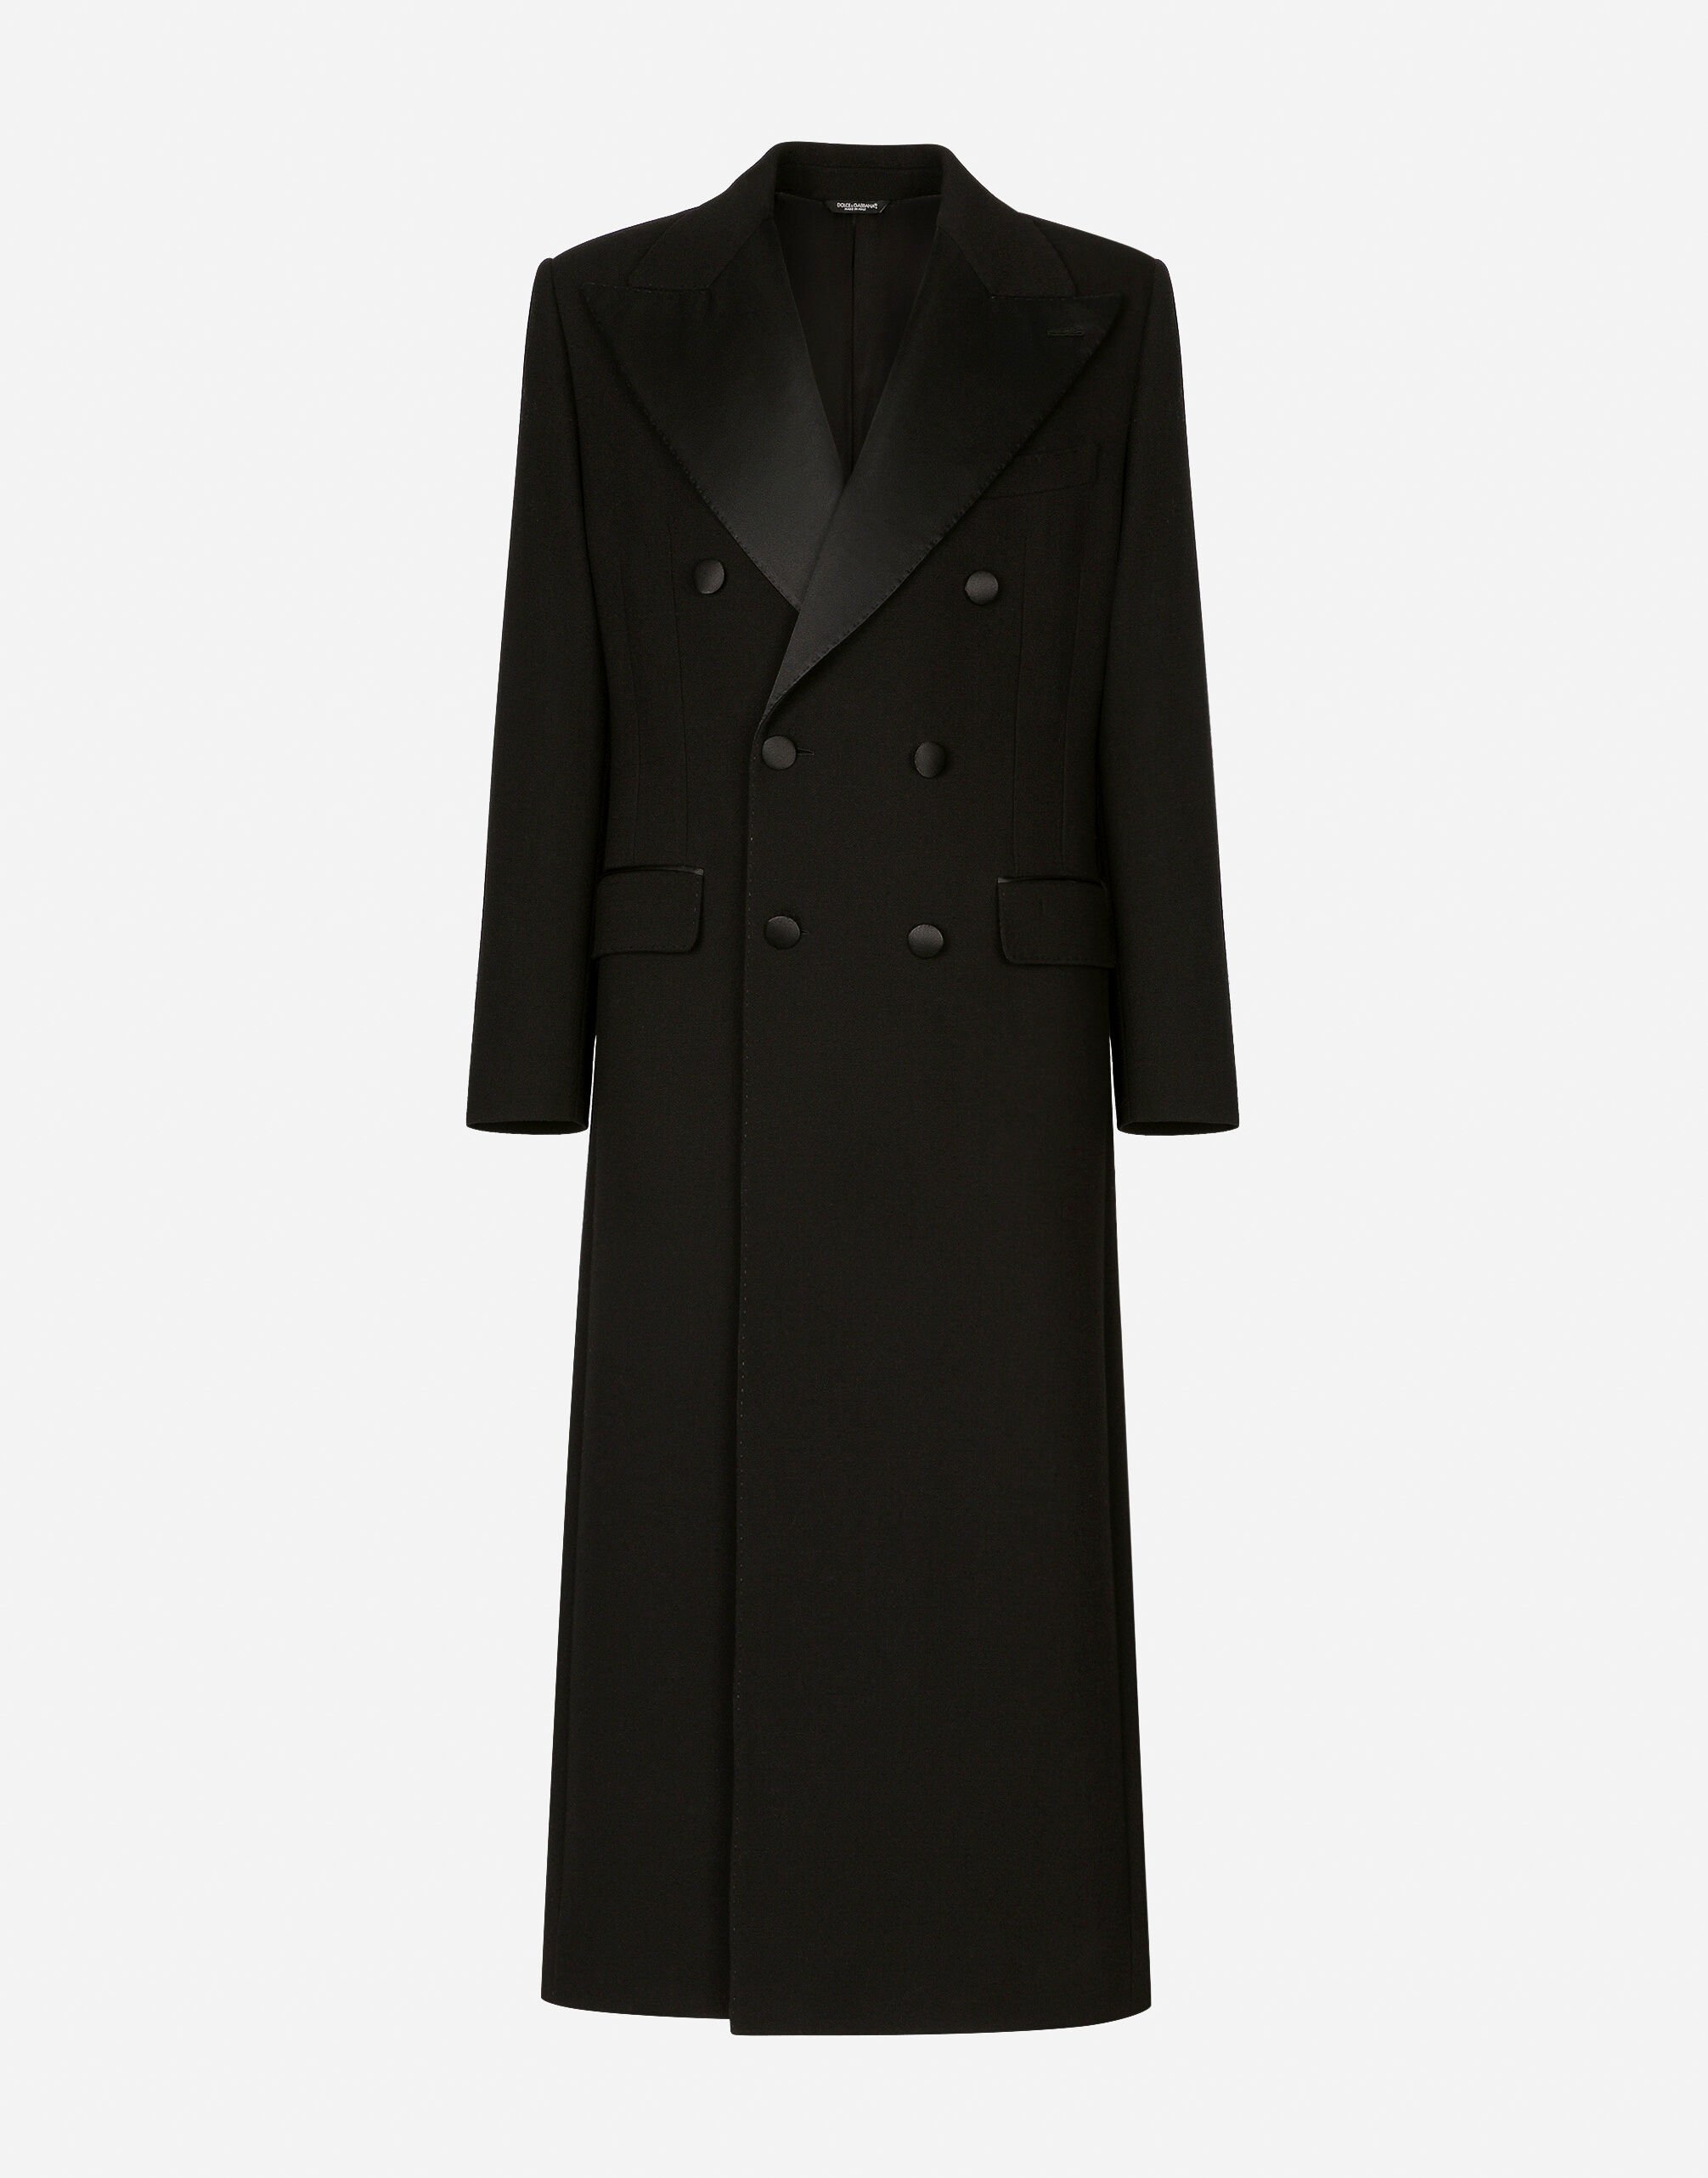 Dolce & Gabbana معطف من صوف كريب مرن بصف أزرار مزدوج أسود A10792A1203